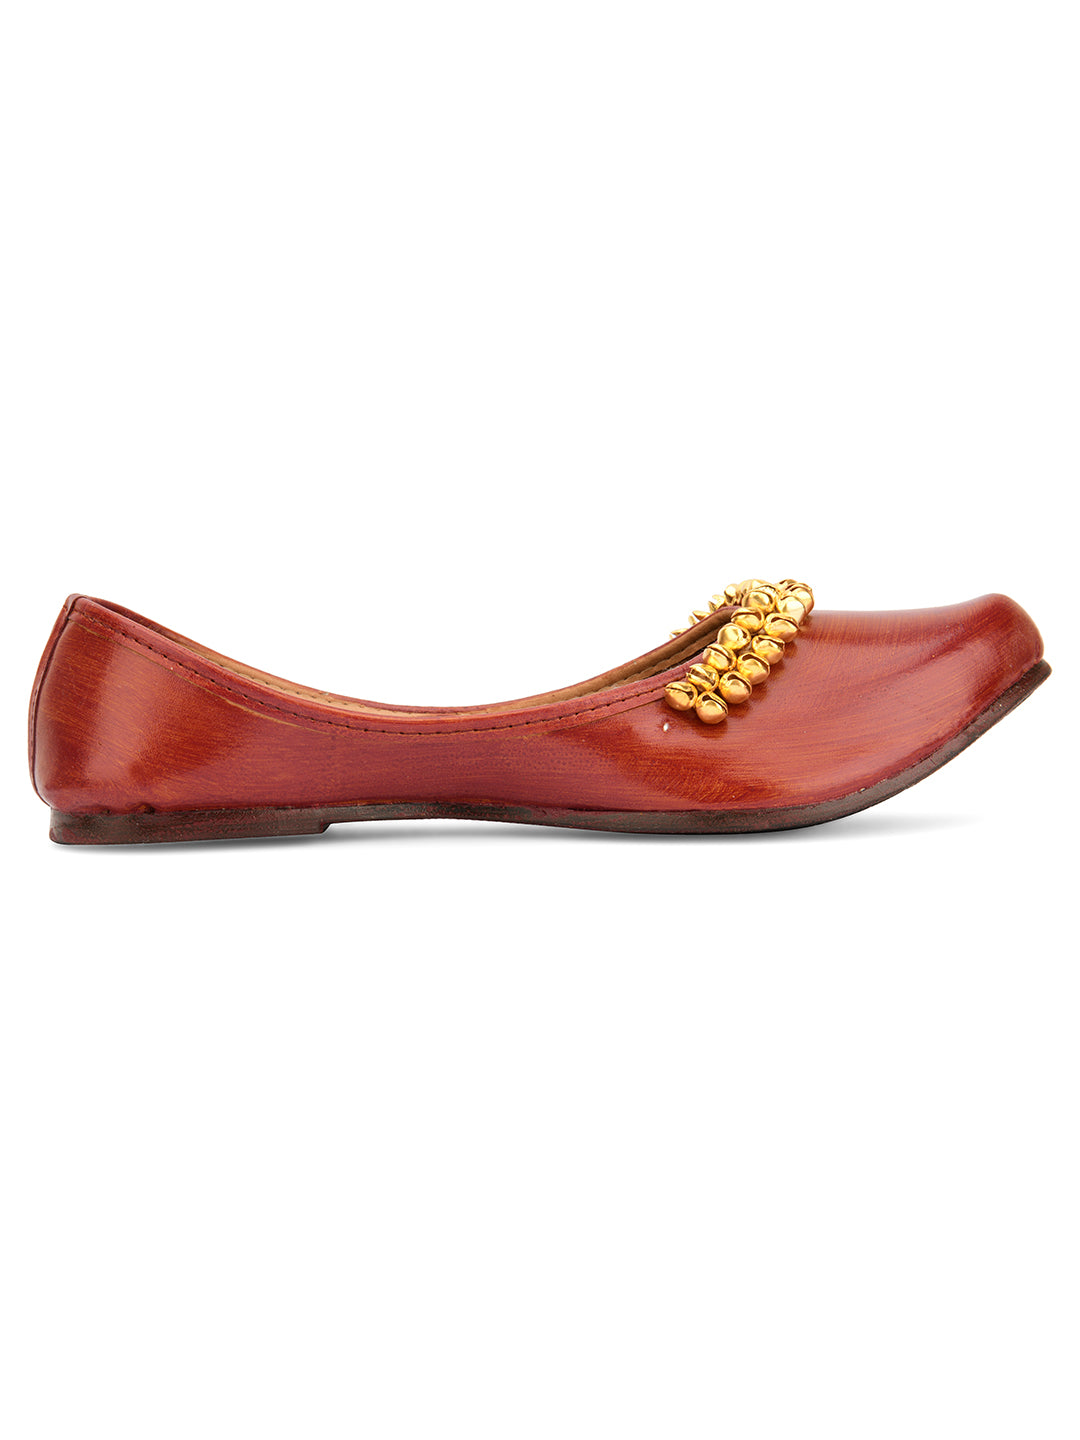 Women's Ghungroo Brown  Indian Ethnic Comfort Footwear - Desi Colour